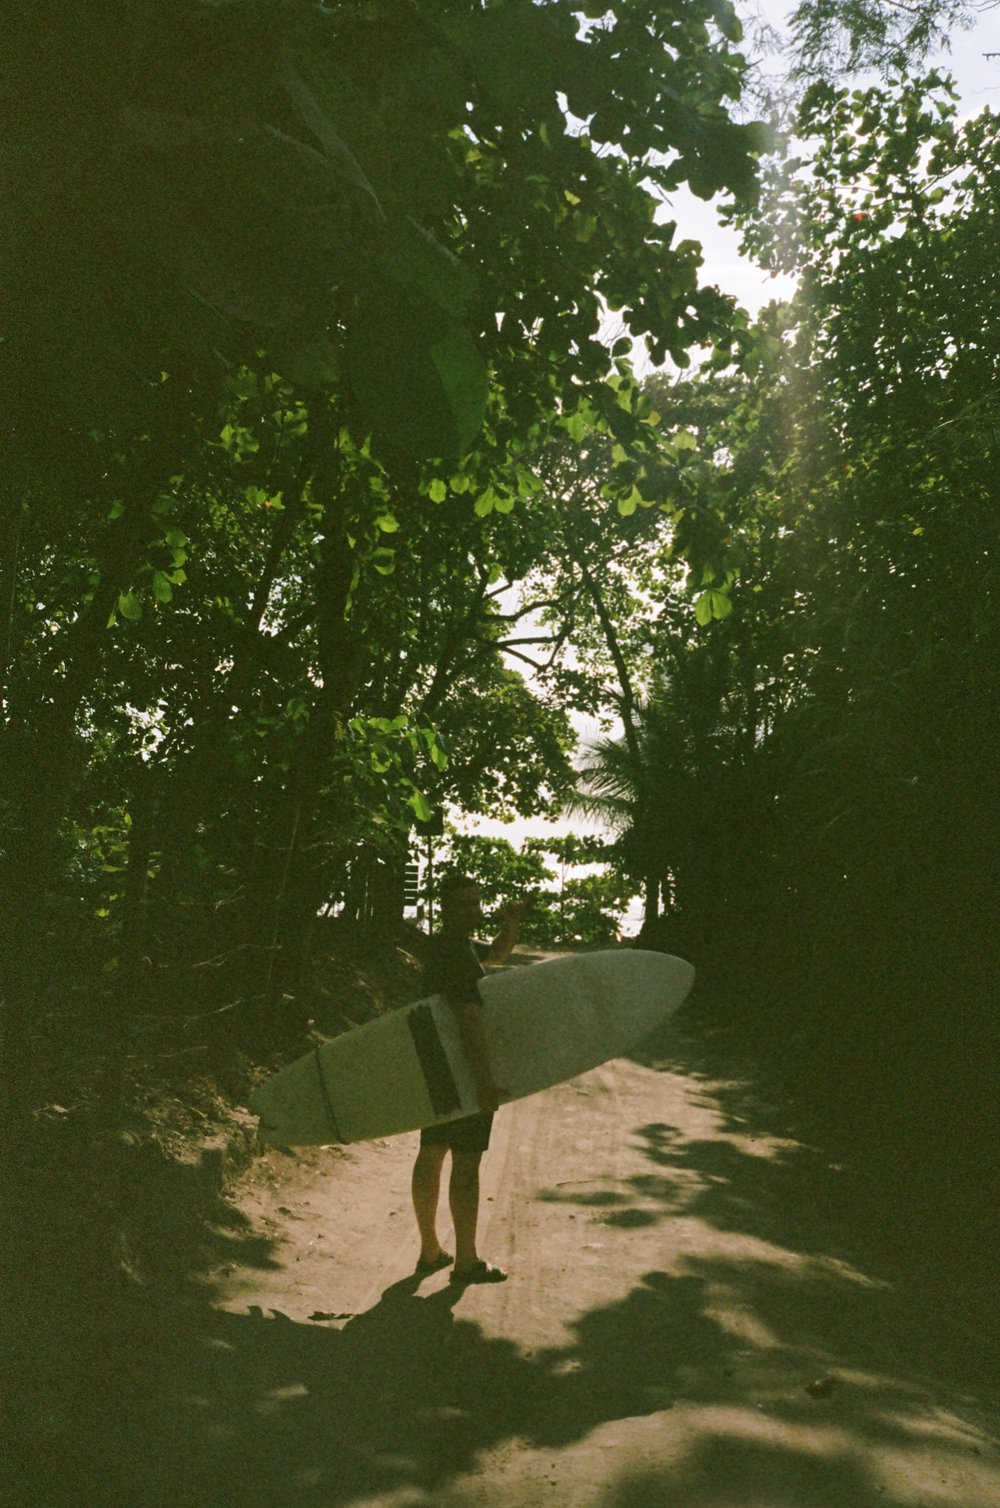 costa-rica-surfing-beach-surf-film-diaries-000975840010.jpg